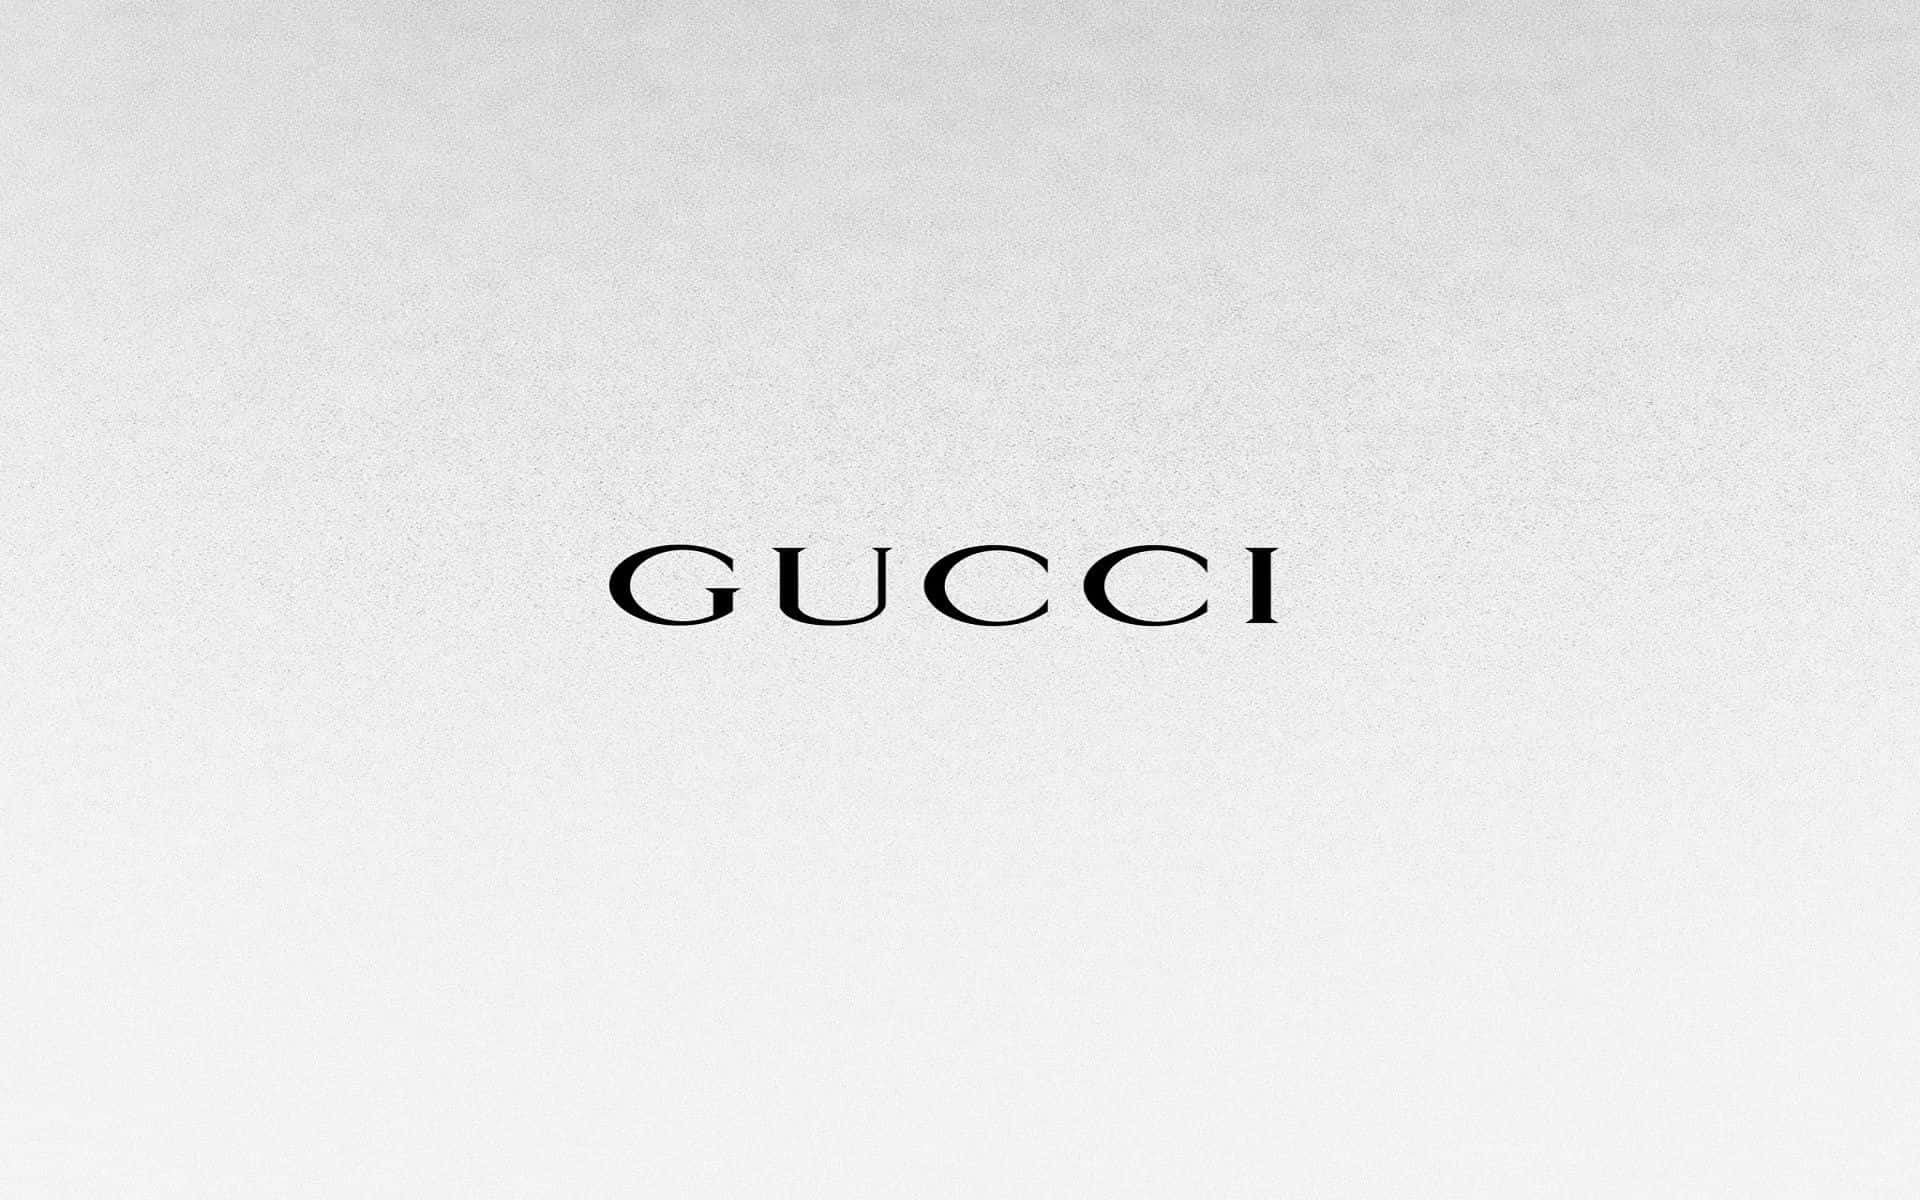 Enkelsvart Bakgrund Med Gucci-text